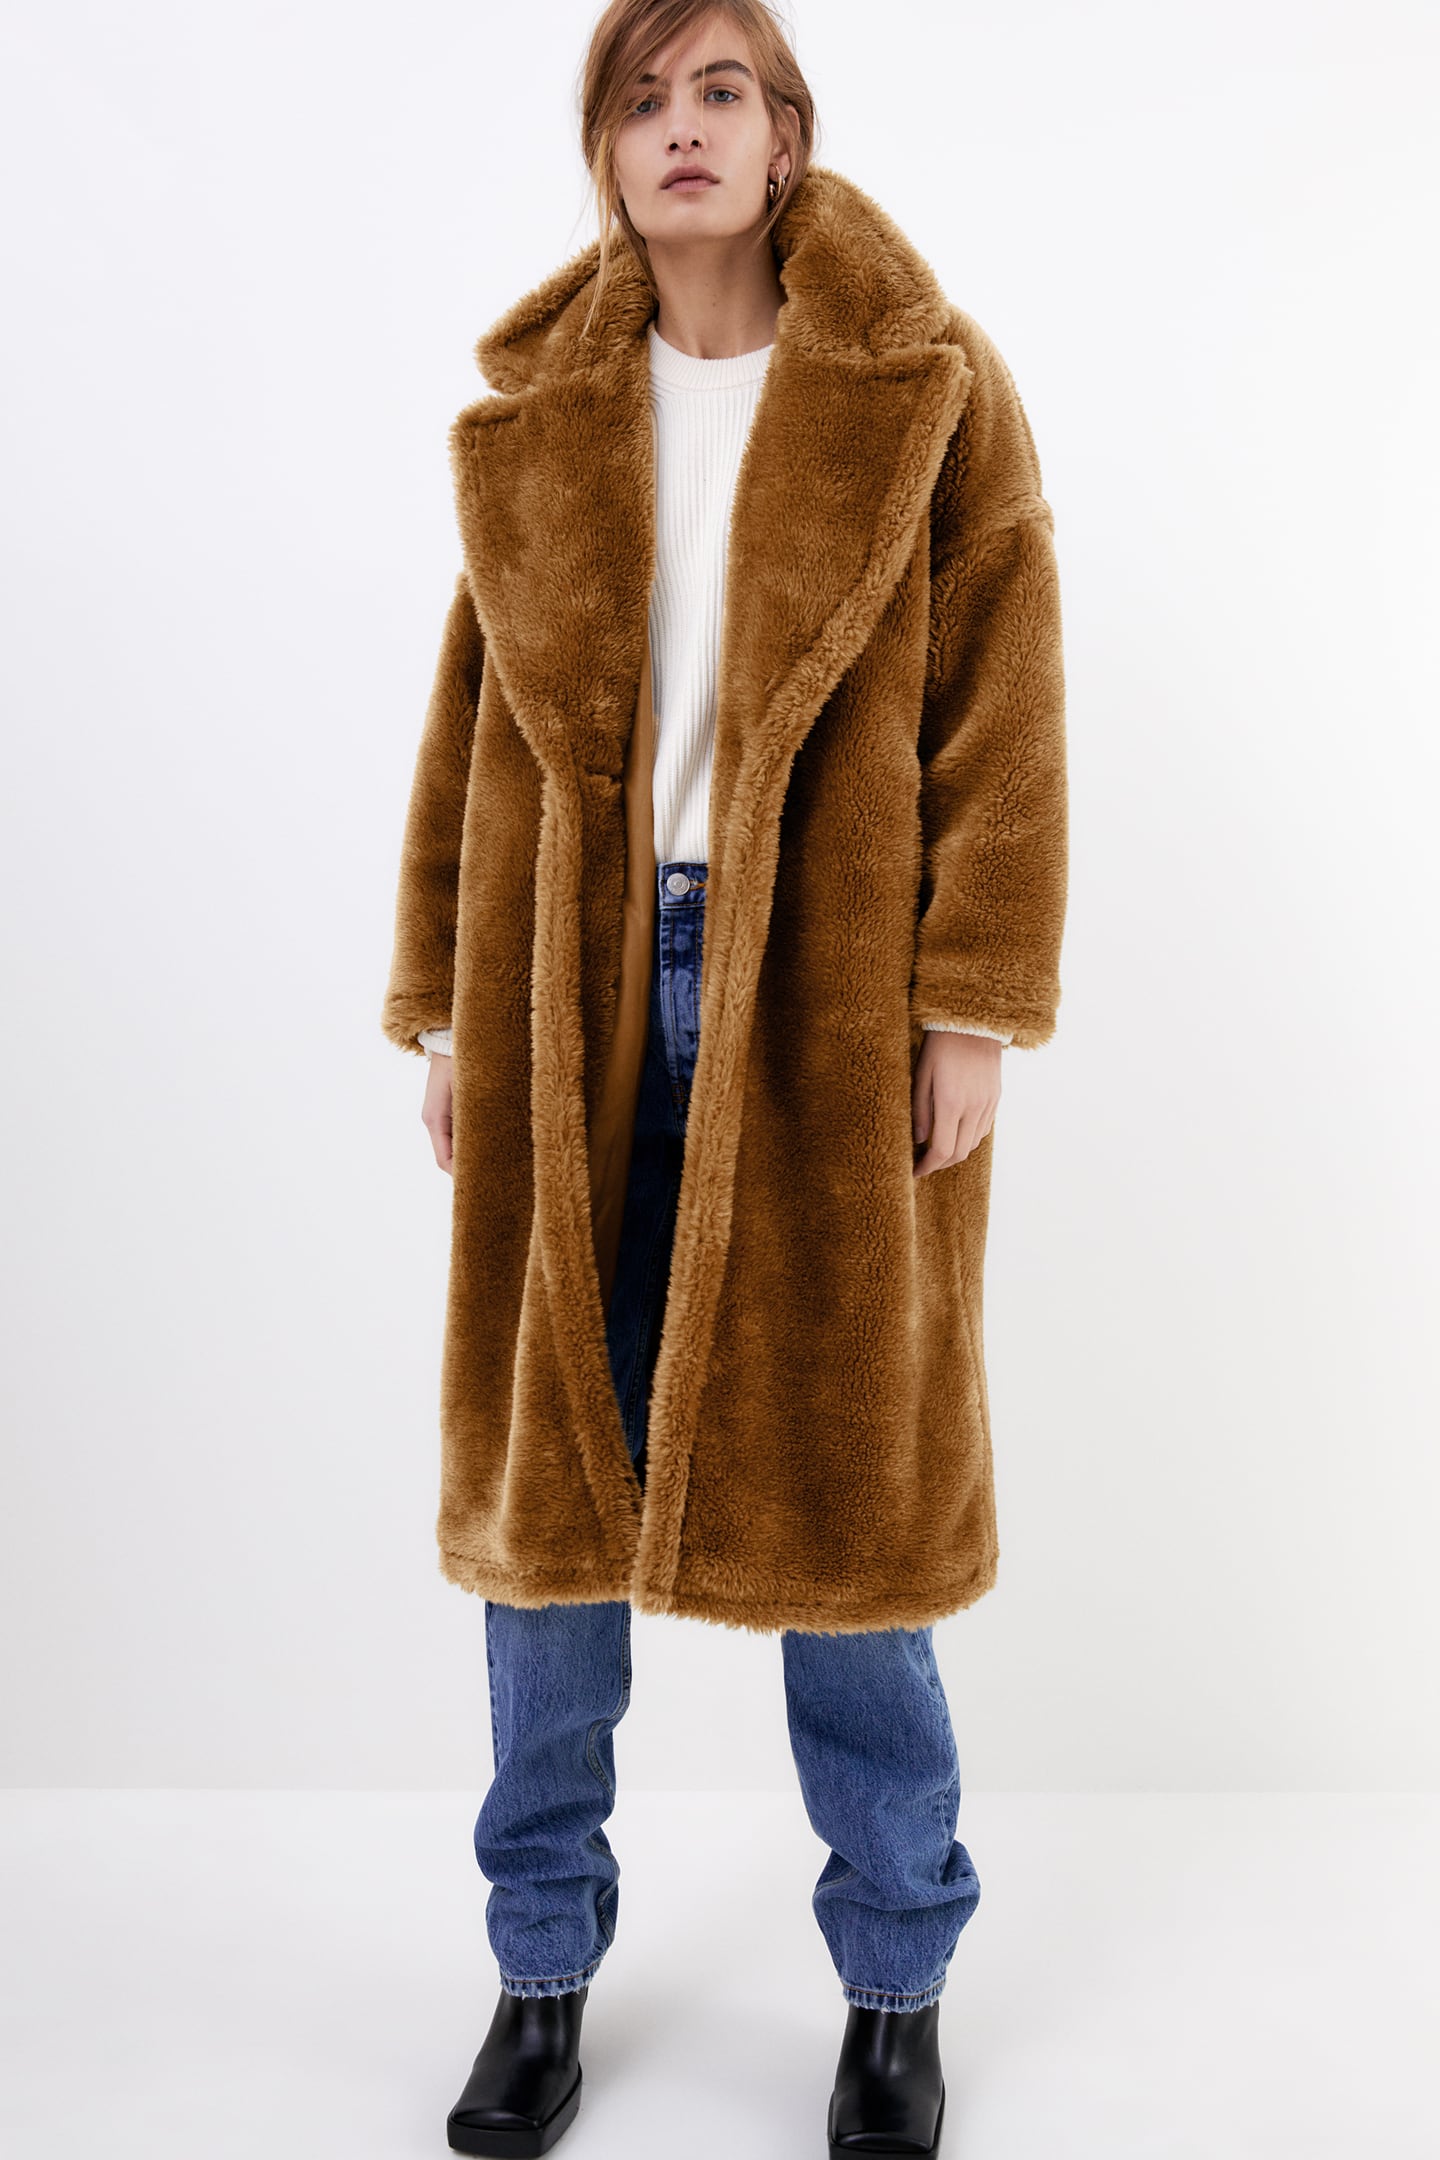 Zara coat with faux fur